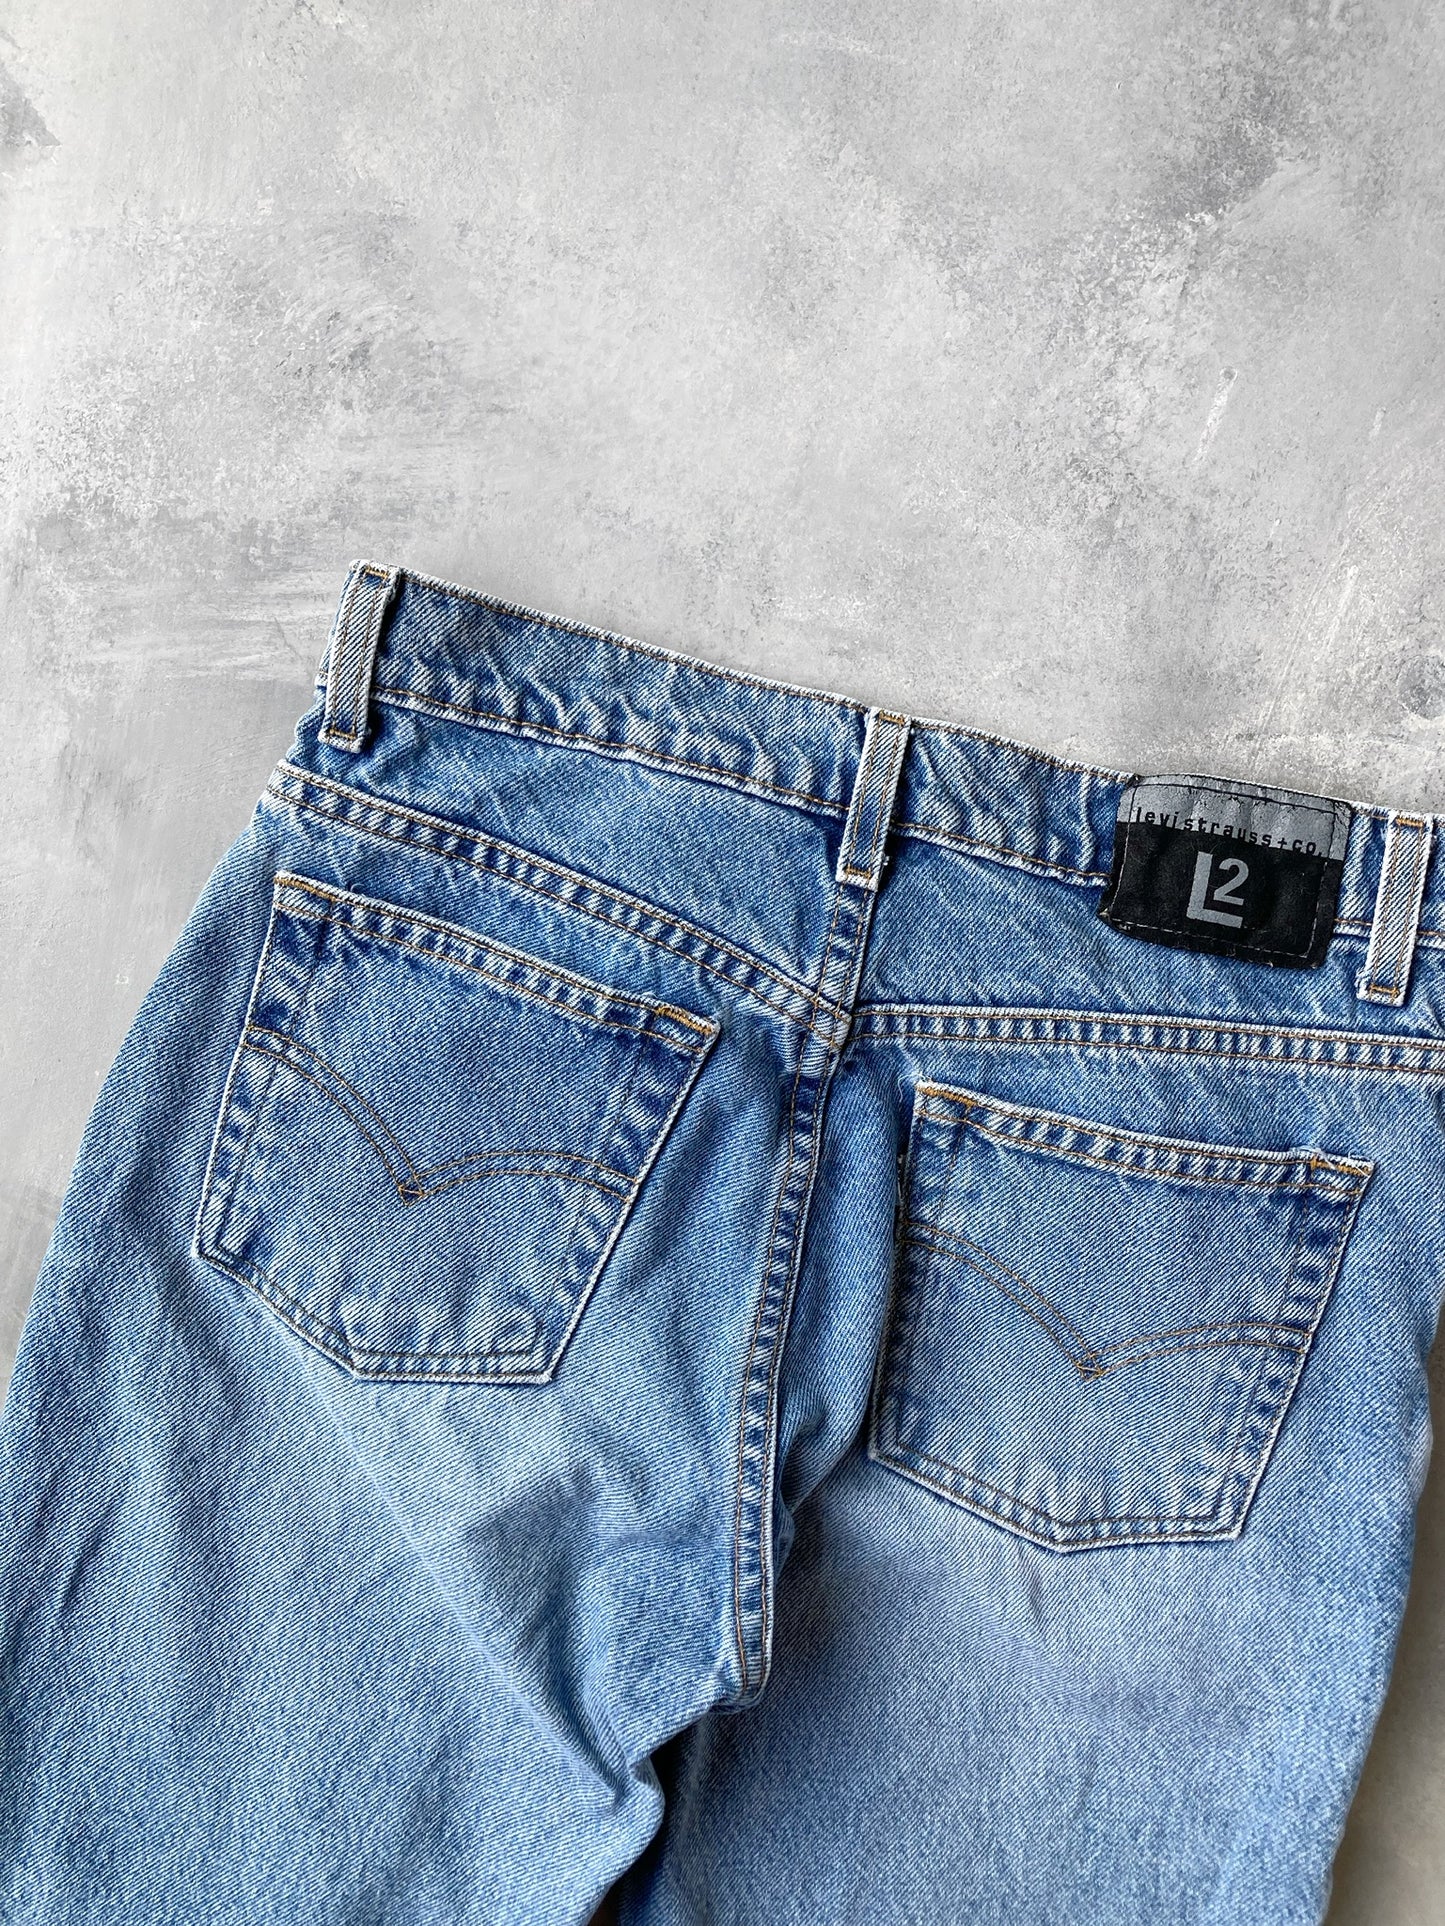 Levi's Silvertab Jeans 90's - 6